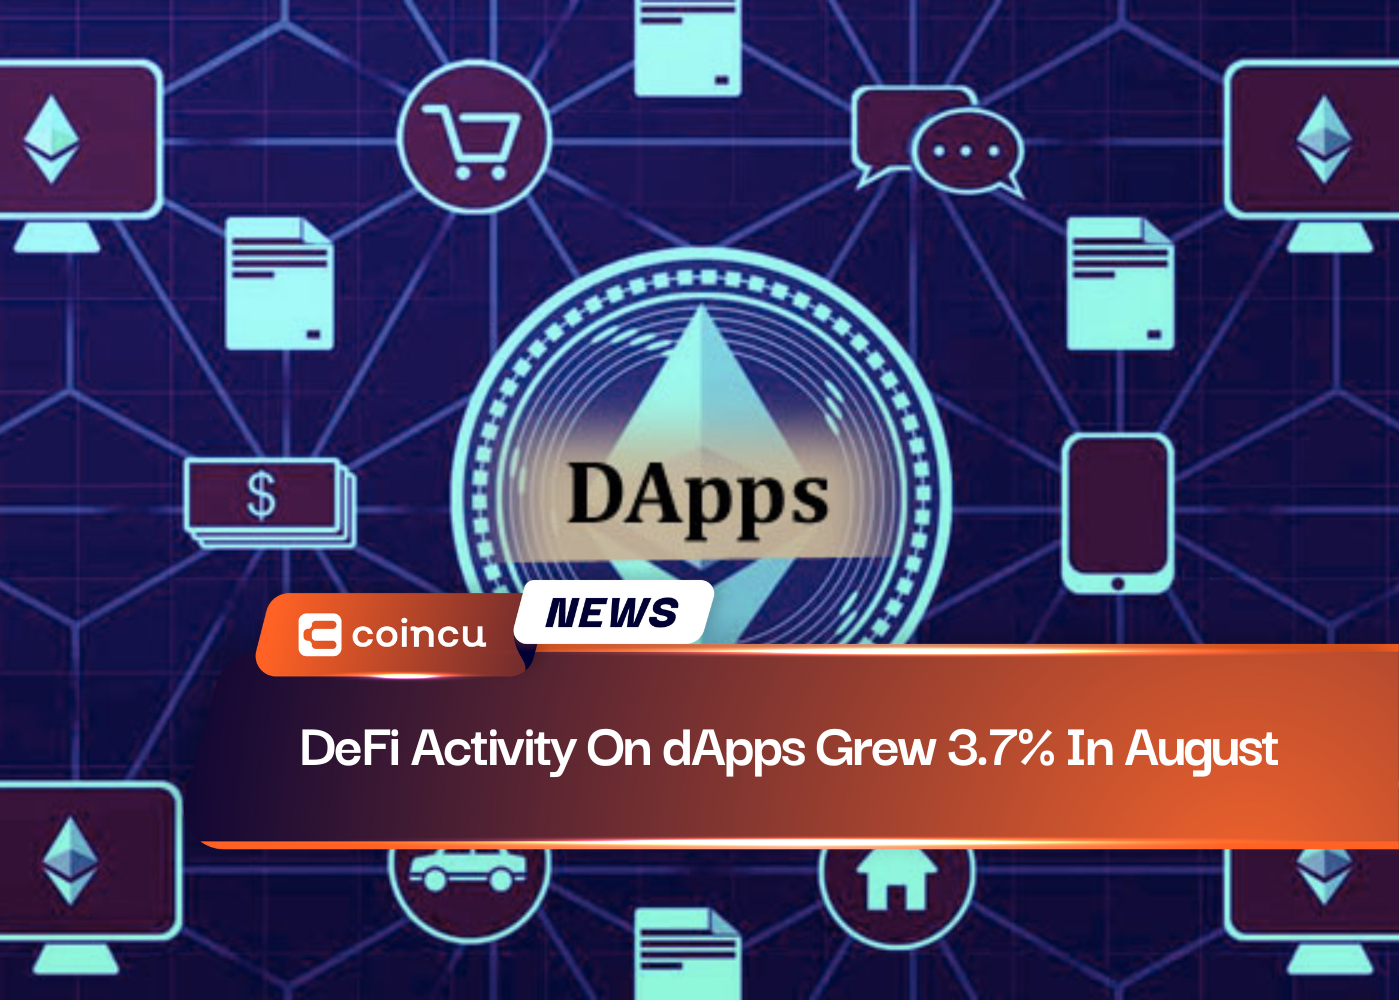 DeFi Activity On dApps Grew 3.7% In August